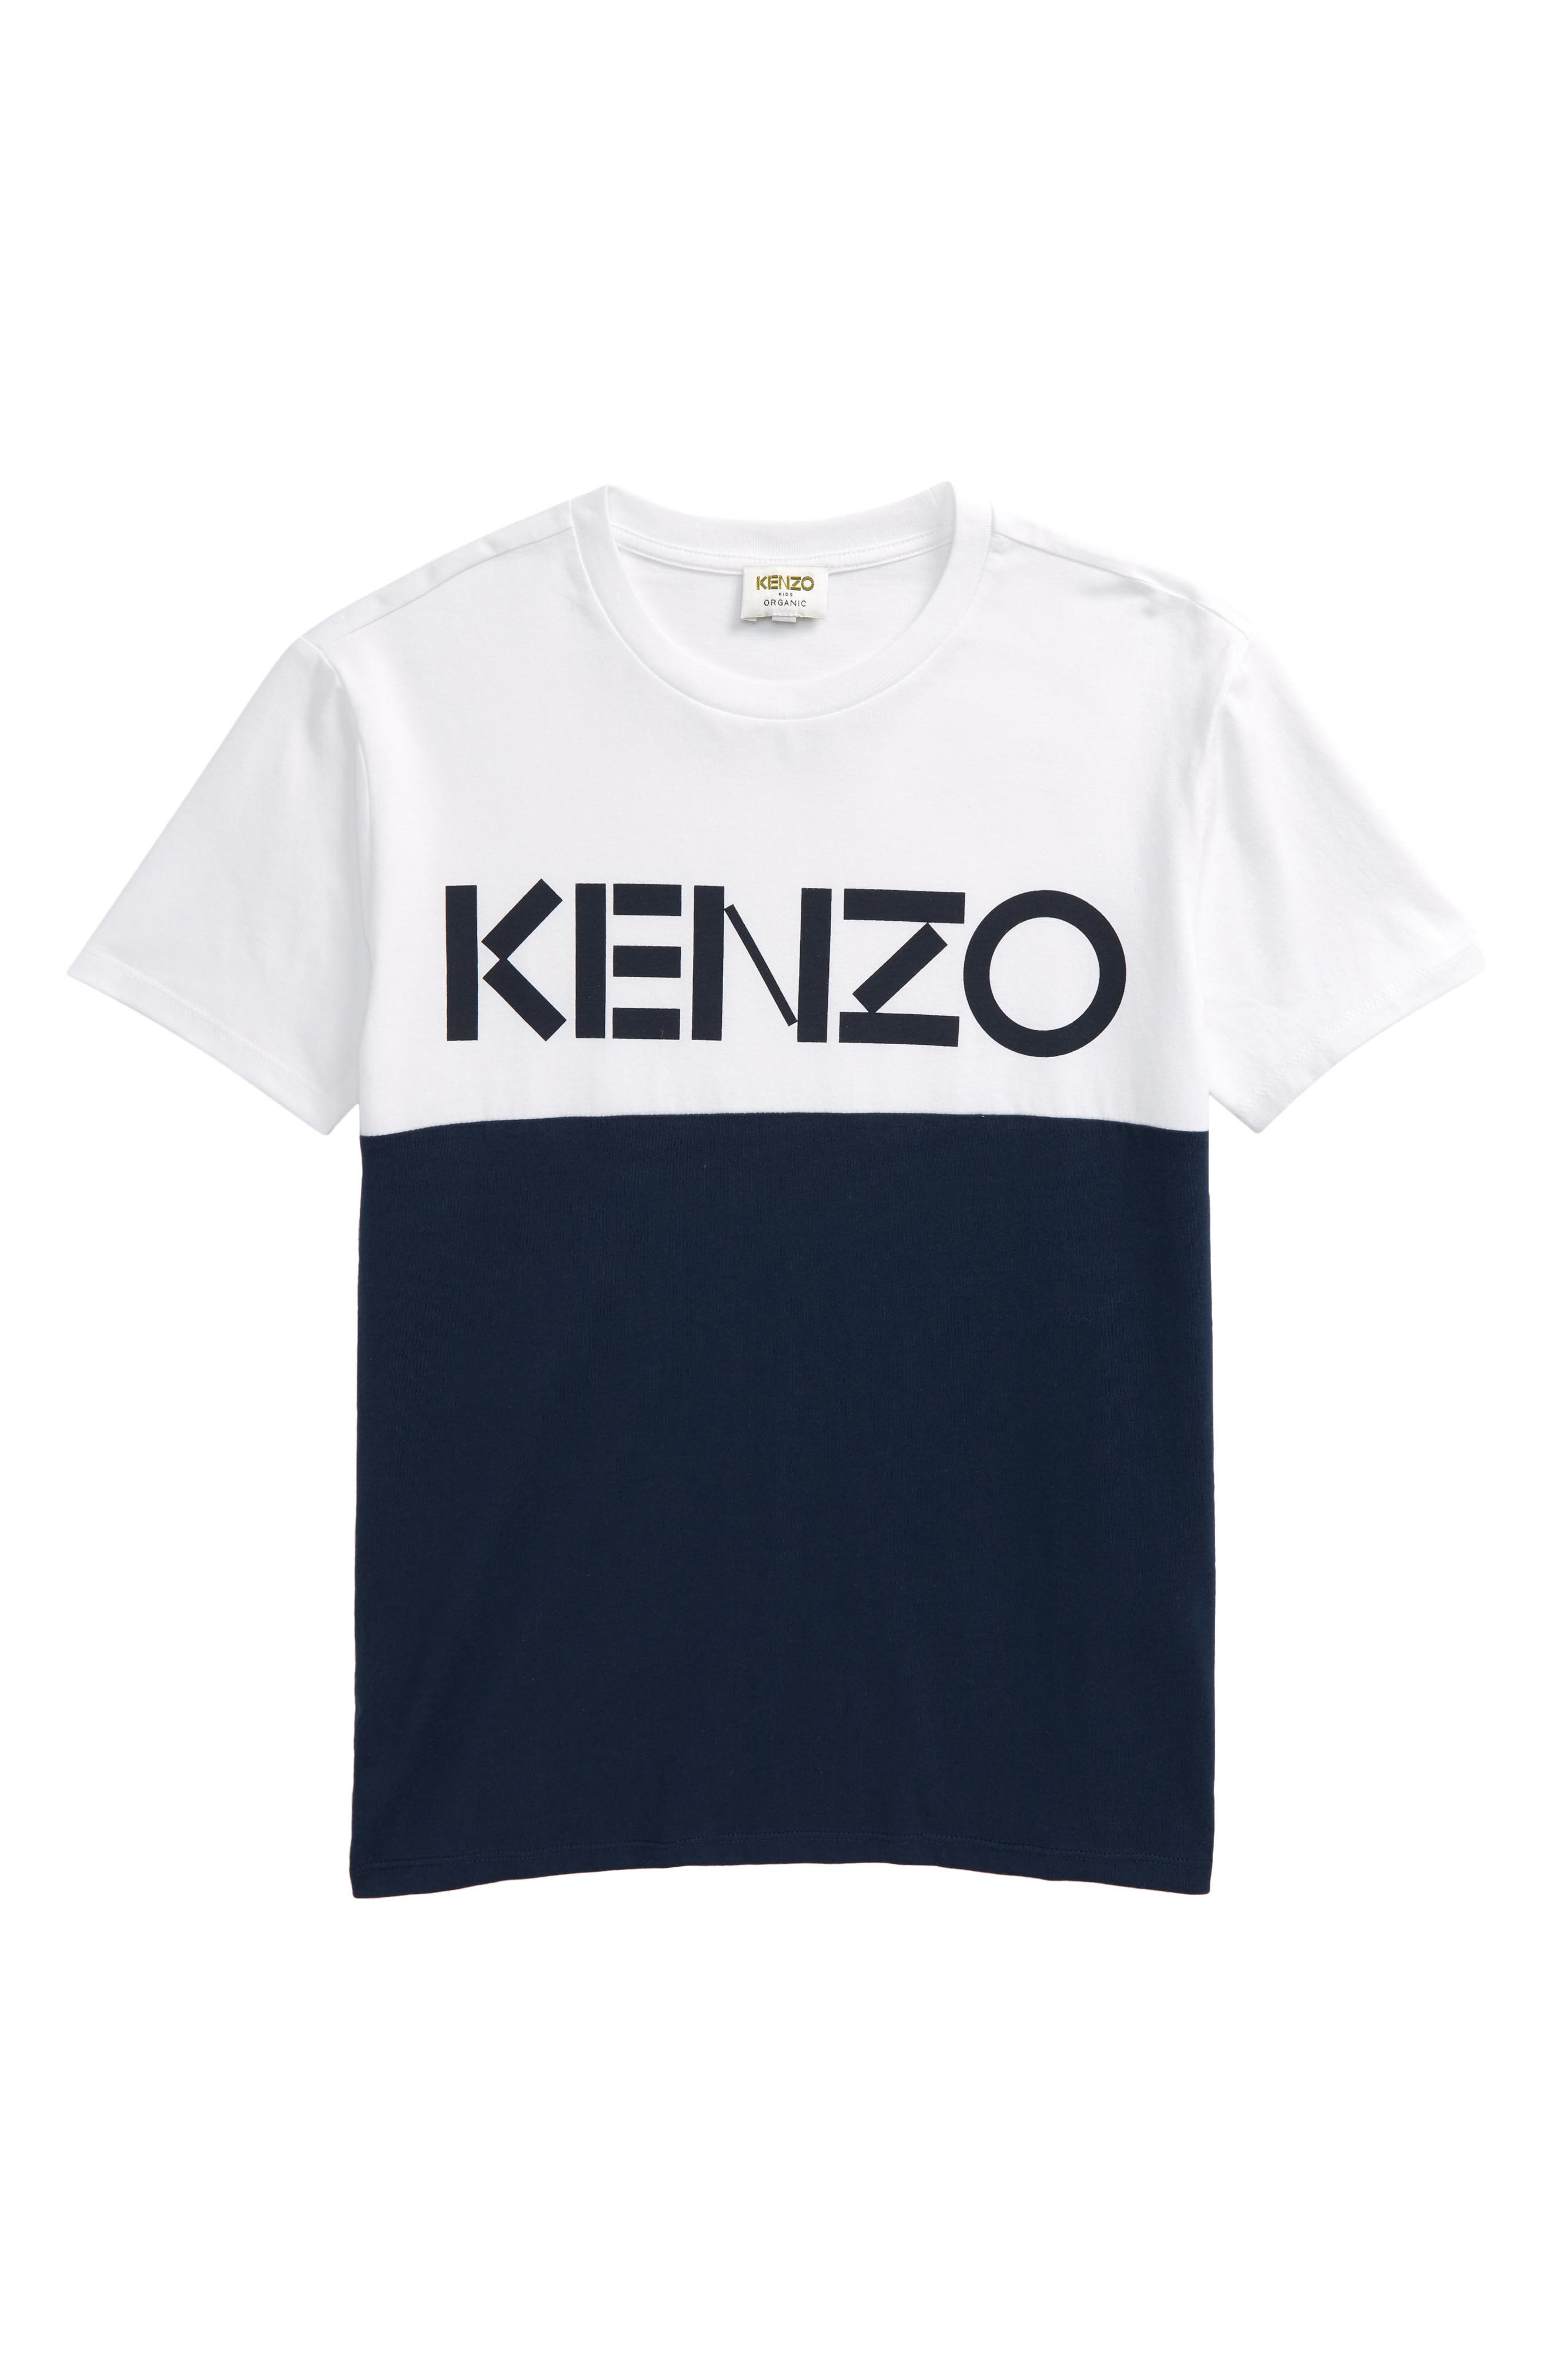 kenzo children's clothing